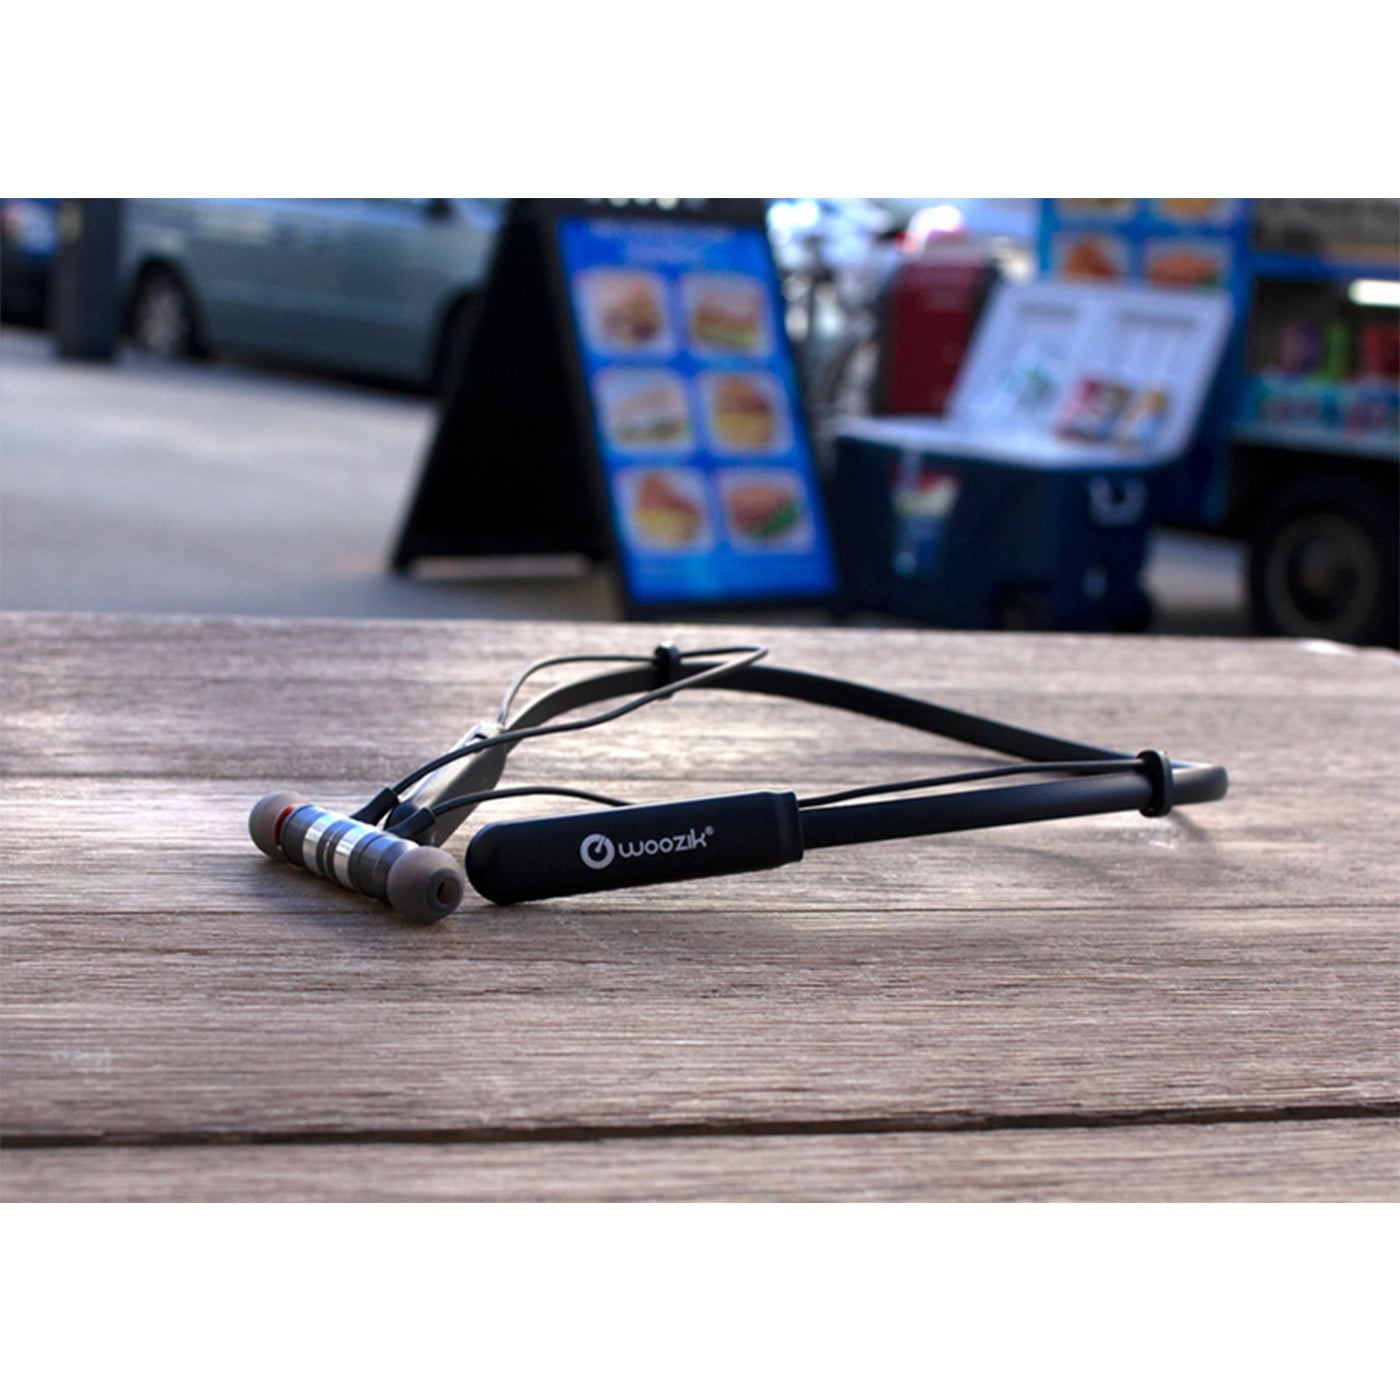 F09 Flex Bluetooth in-Ear Headphones